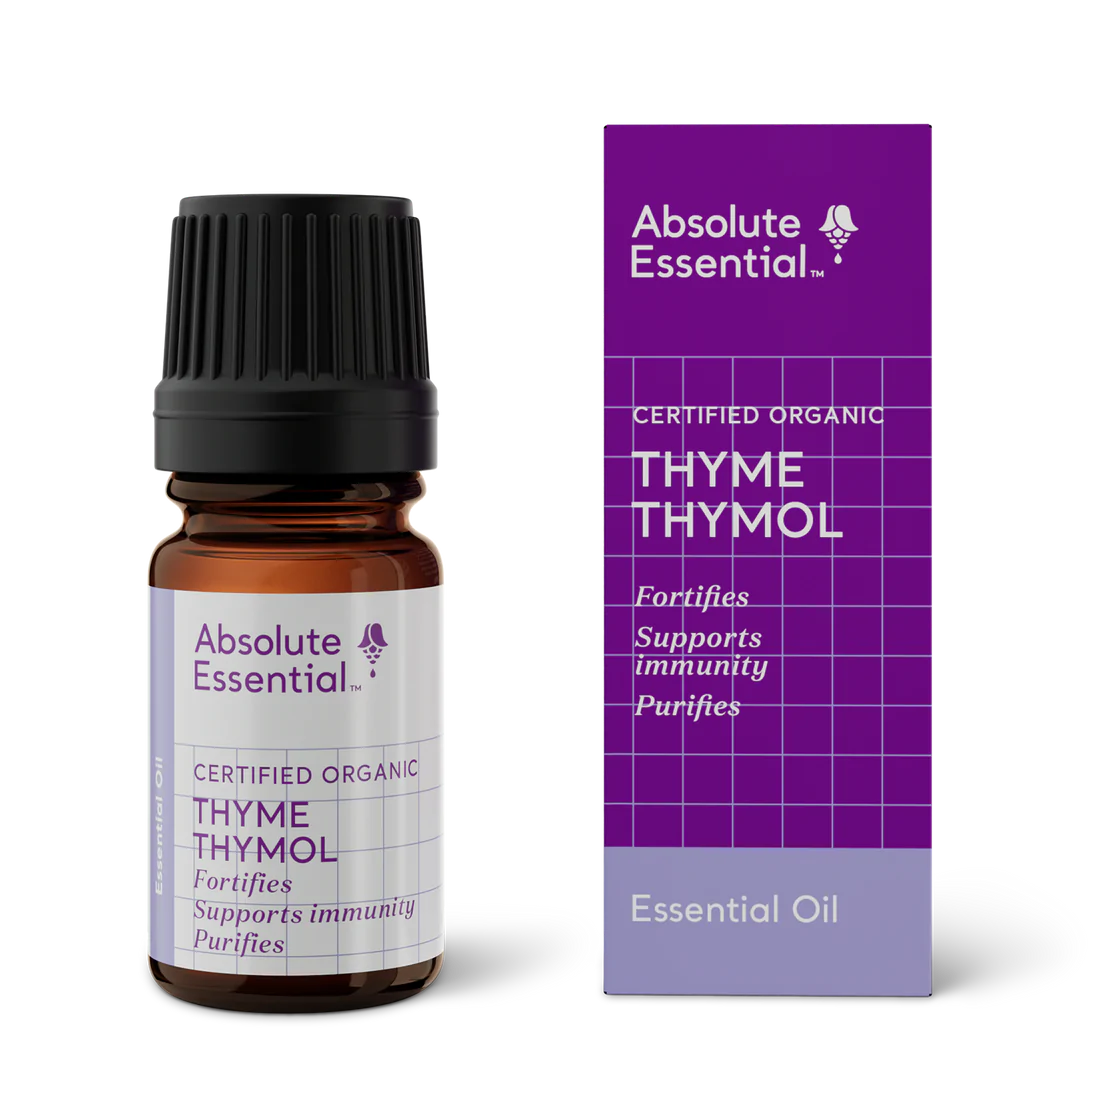 Absolute Essential Thyme Thymol Oil